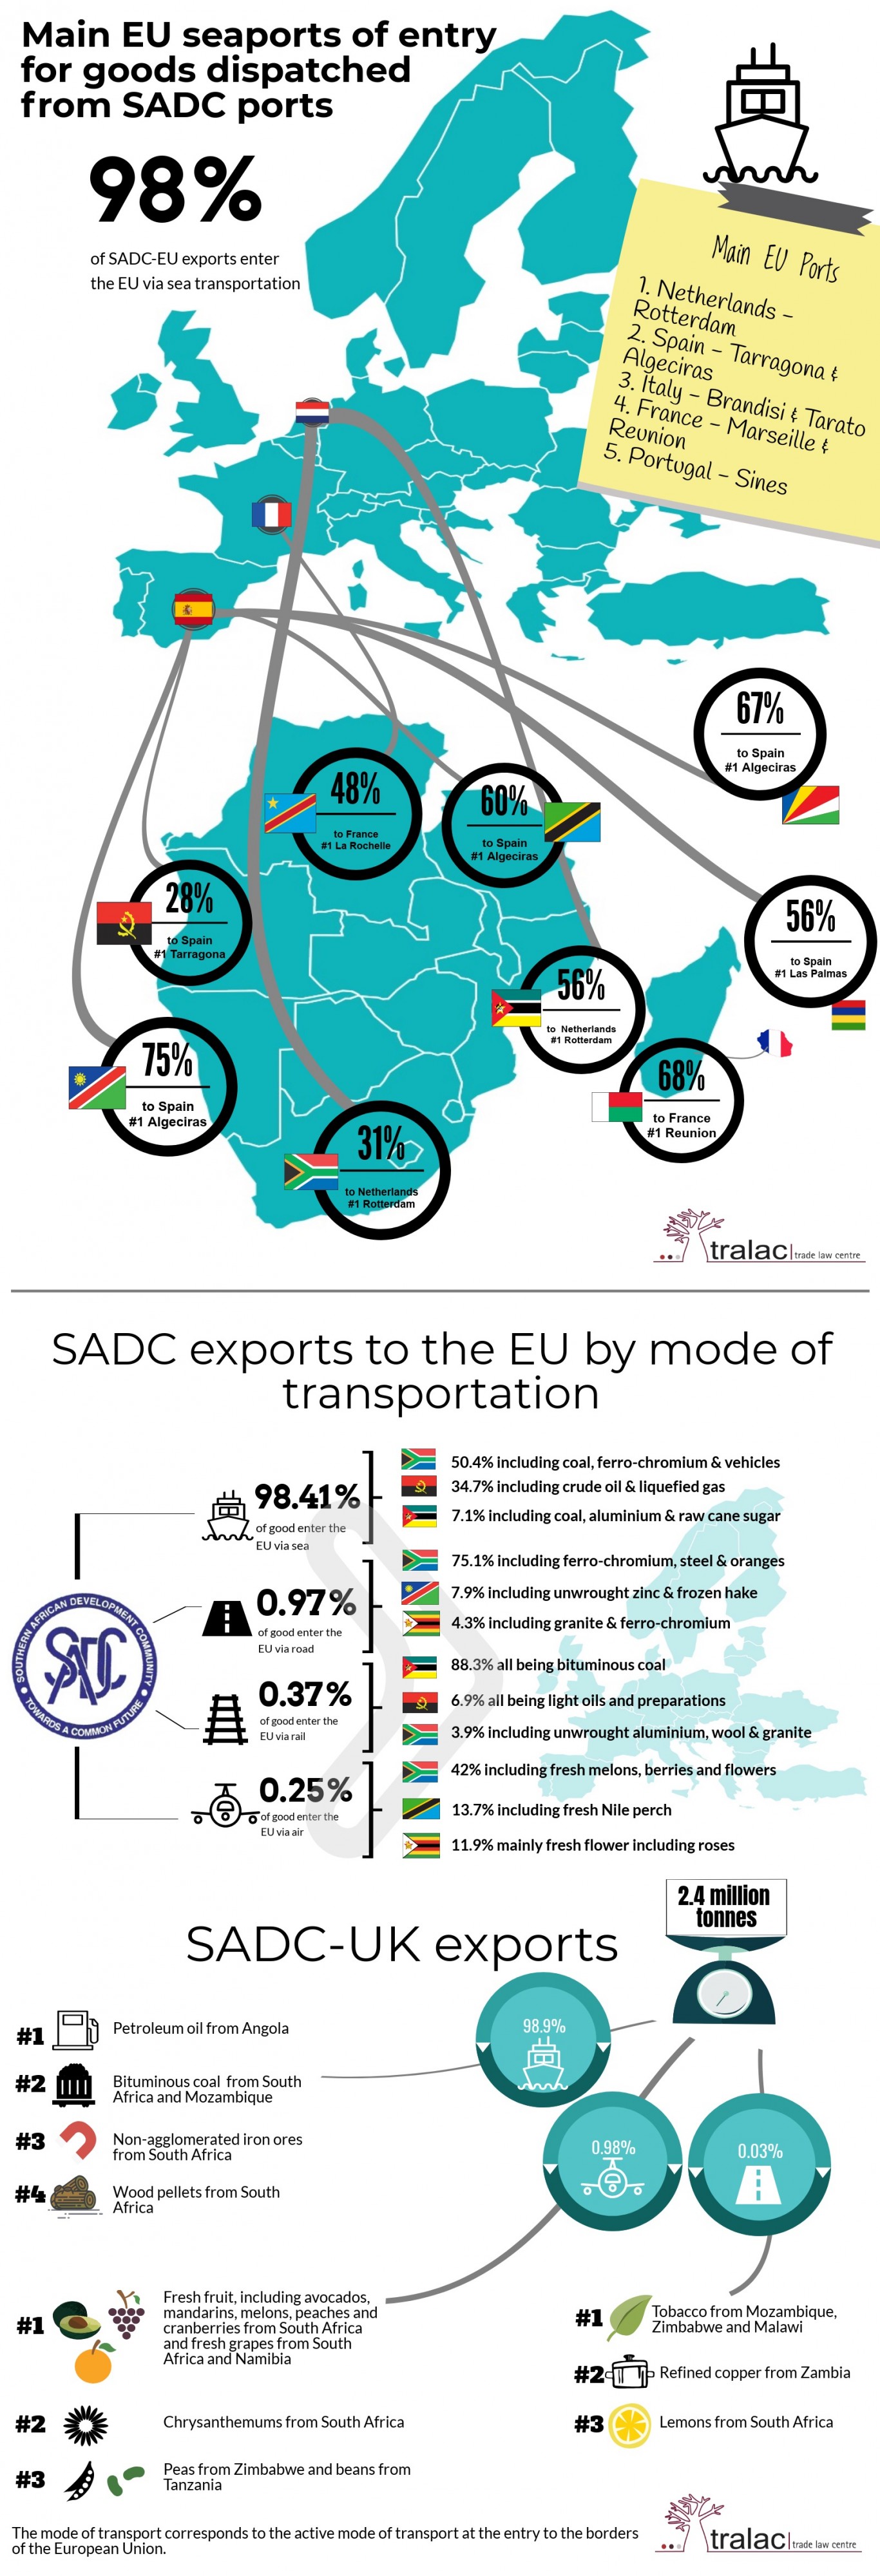 Trade routes: goods trade between SADC and the EU